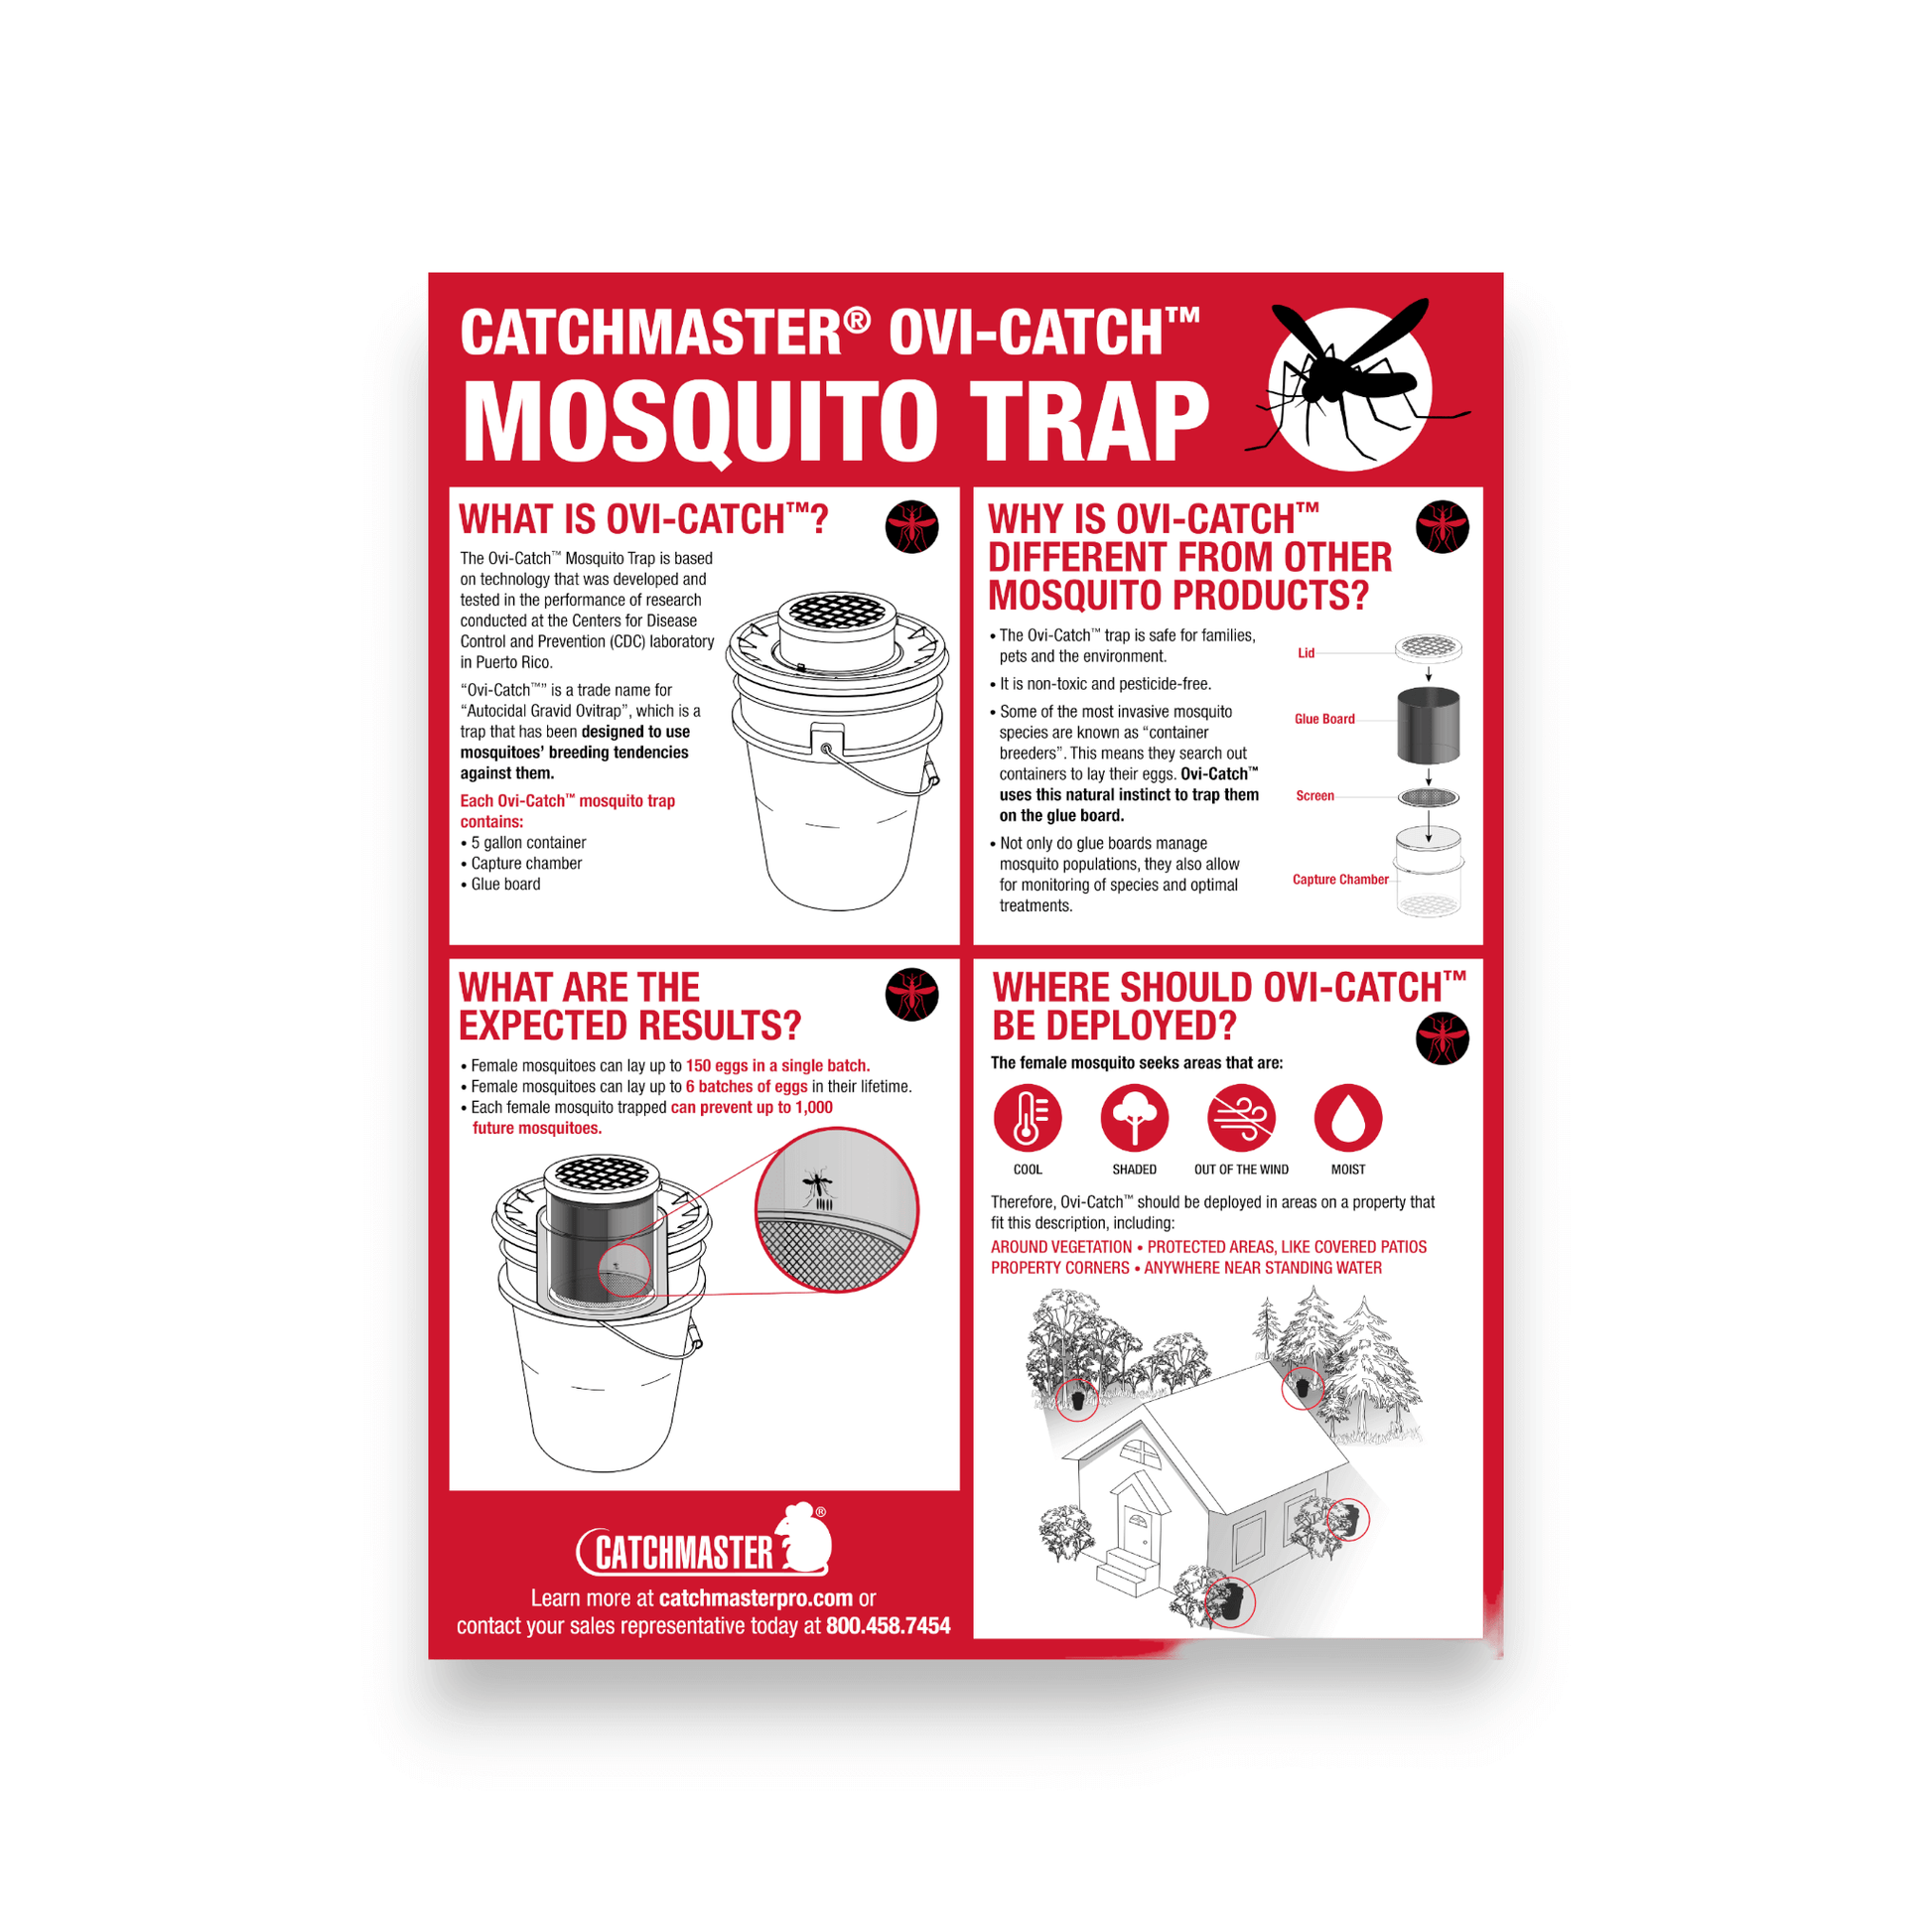 CATCHMASTER, piège à moustique Ovi-Catch Ago Instructions, CATCHMASTER, Ovi-Catch Ago mosquito trap Instructions